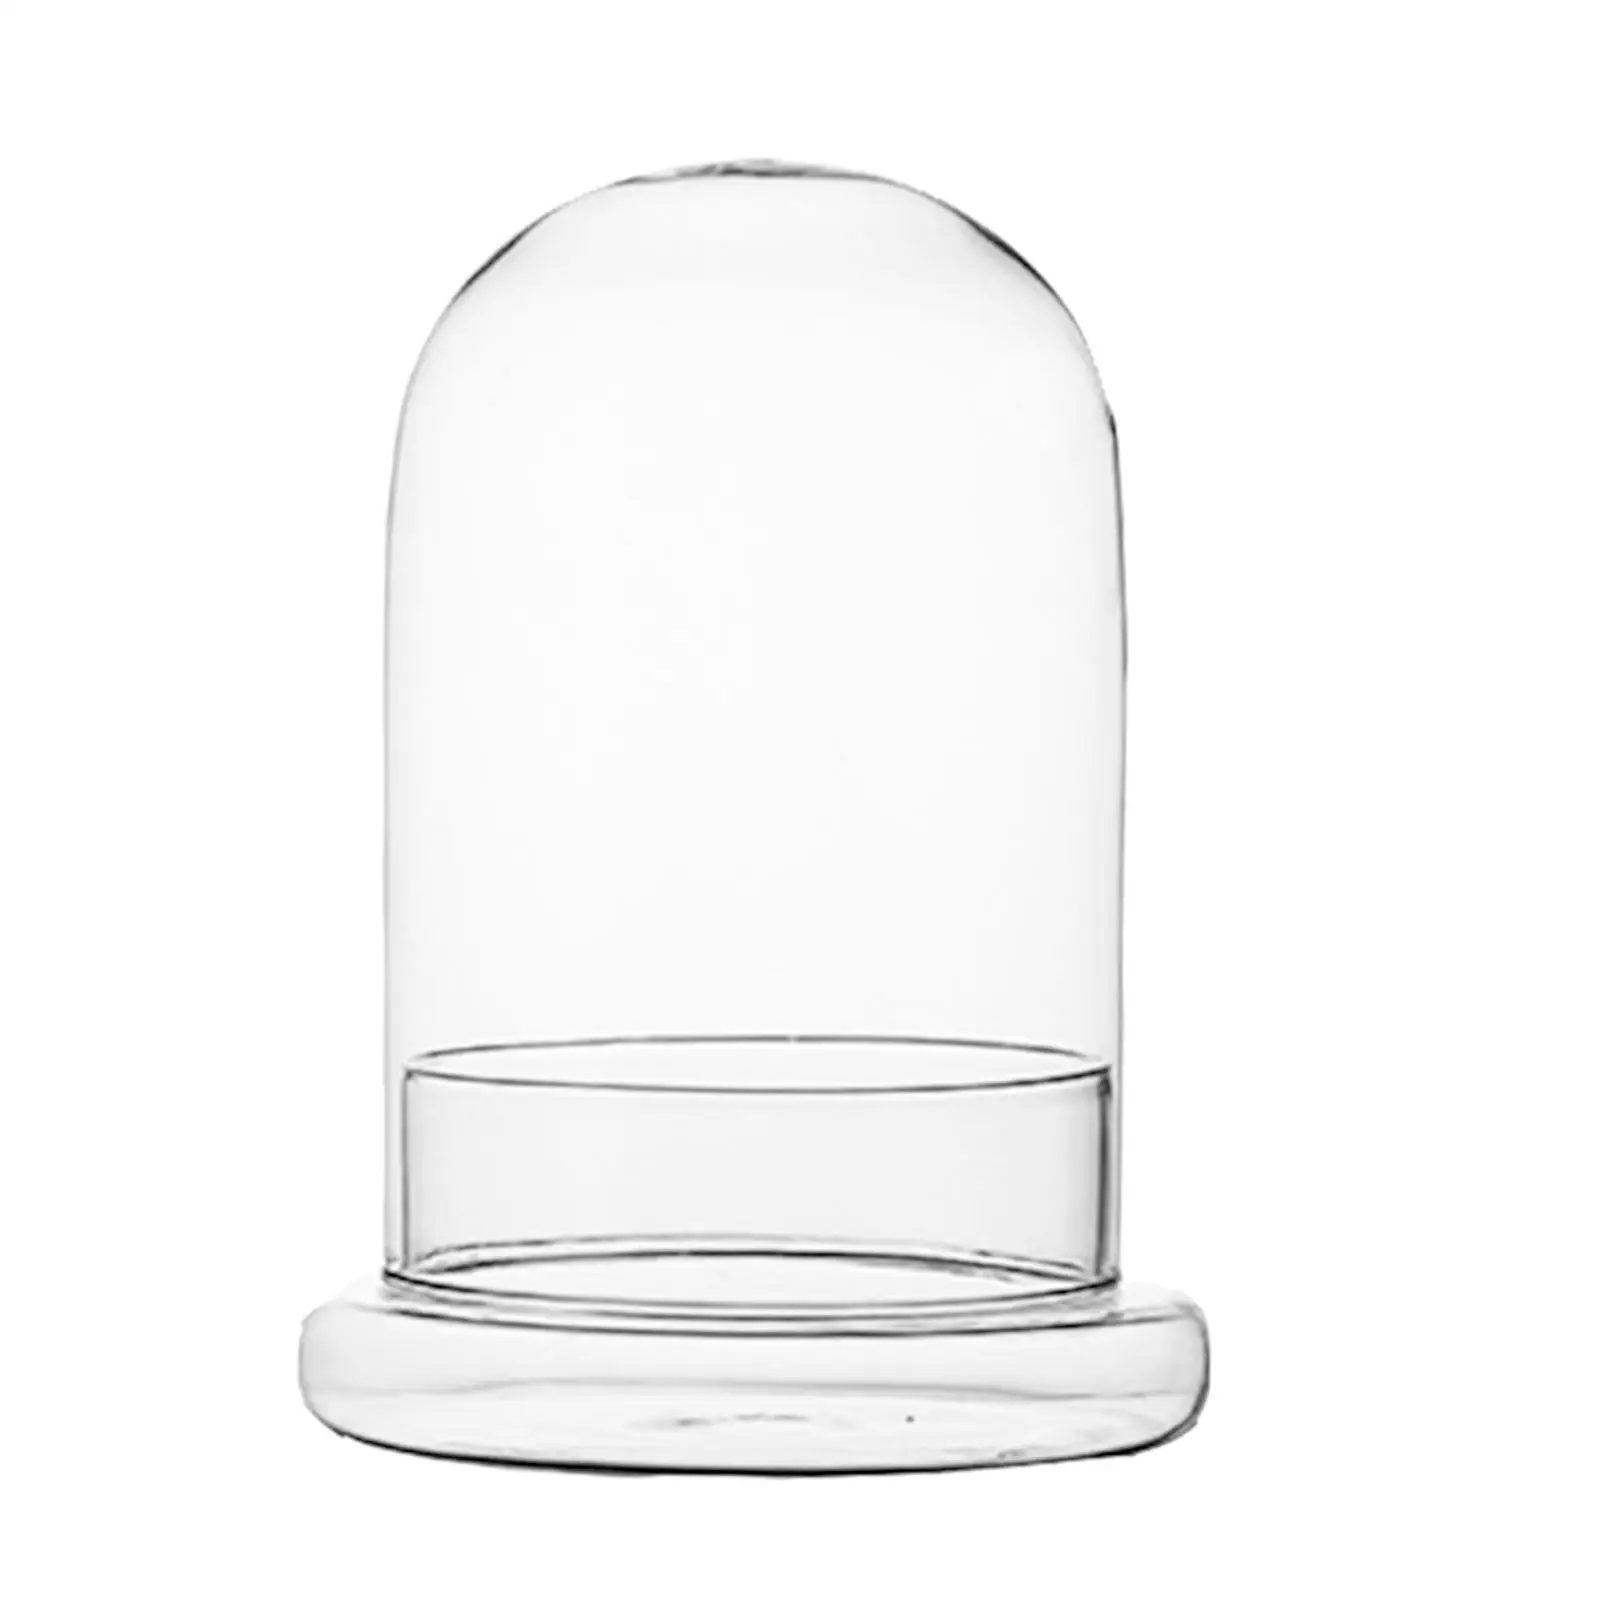 Micro Landscape Vase Landscape Container Plants Bottle for Party Indoor Desk